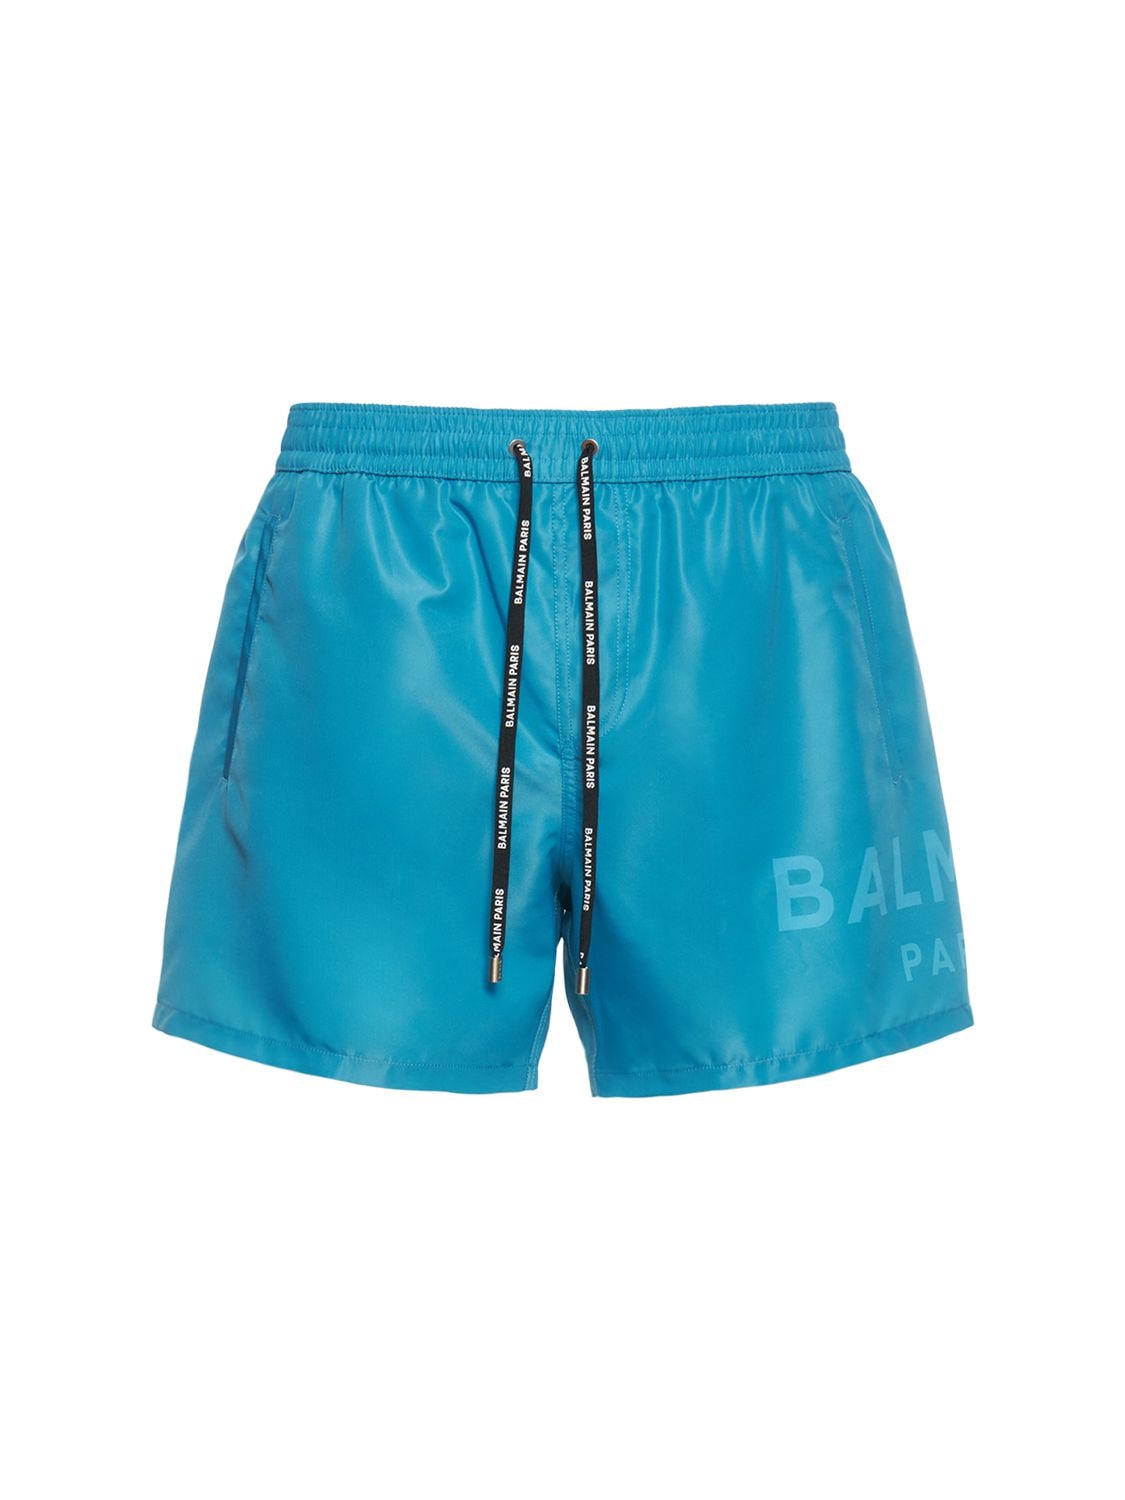 Balmain Underwear Logo Printed Stretch Nylon Swim Shorts In Tuquoise